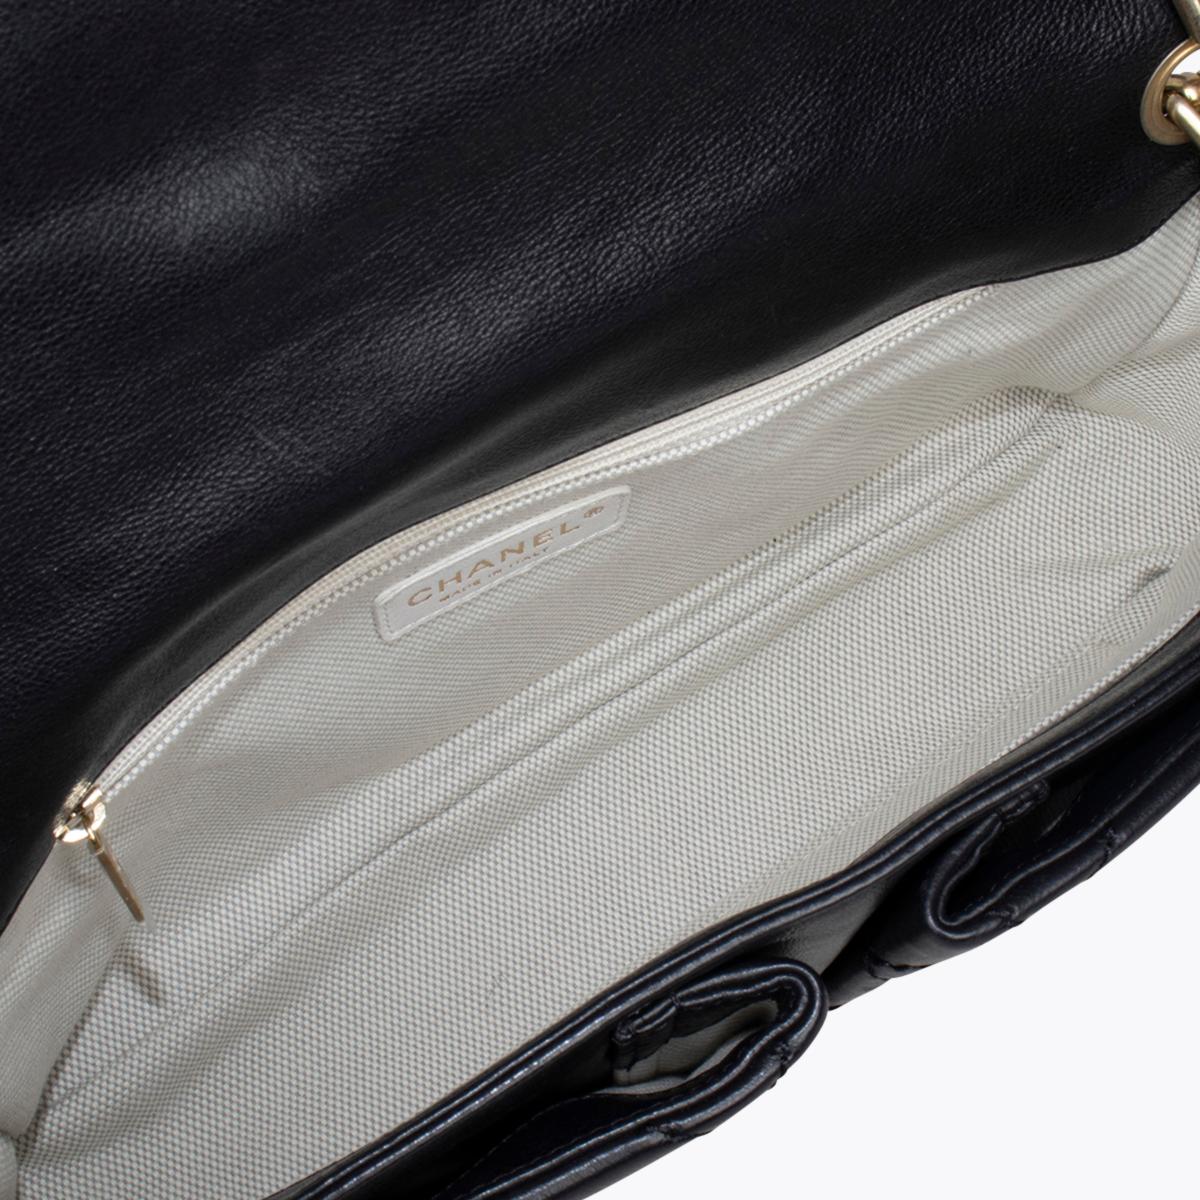 Chanel Ultimate Stitch Retro Chain Flap Bag In Good Condition For Sale In Sundbyberg, SE